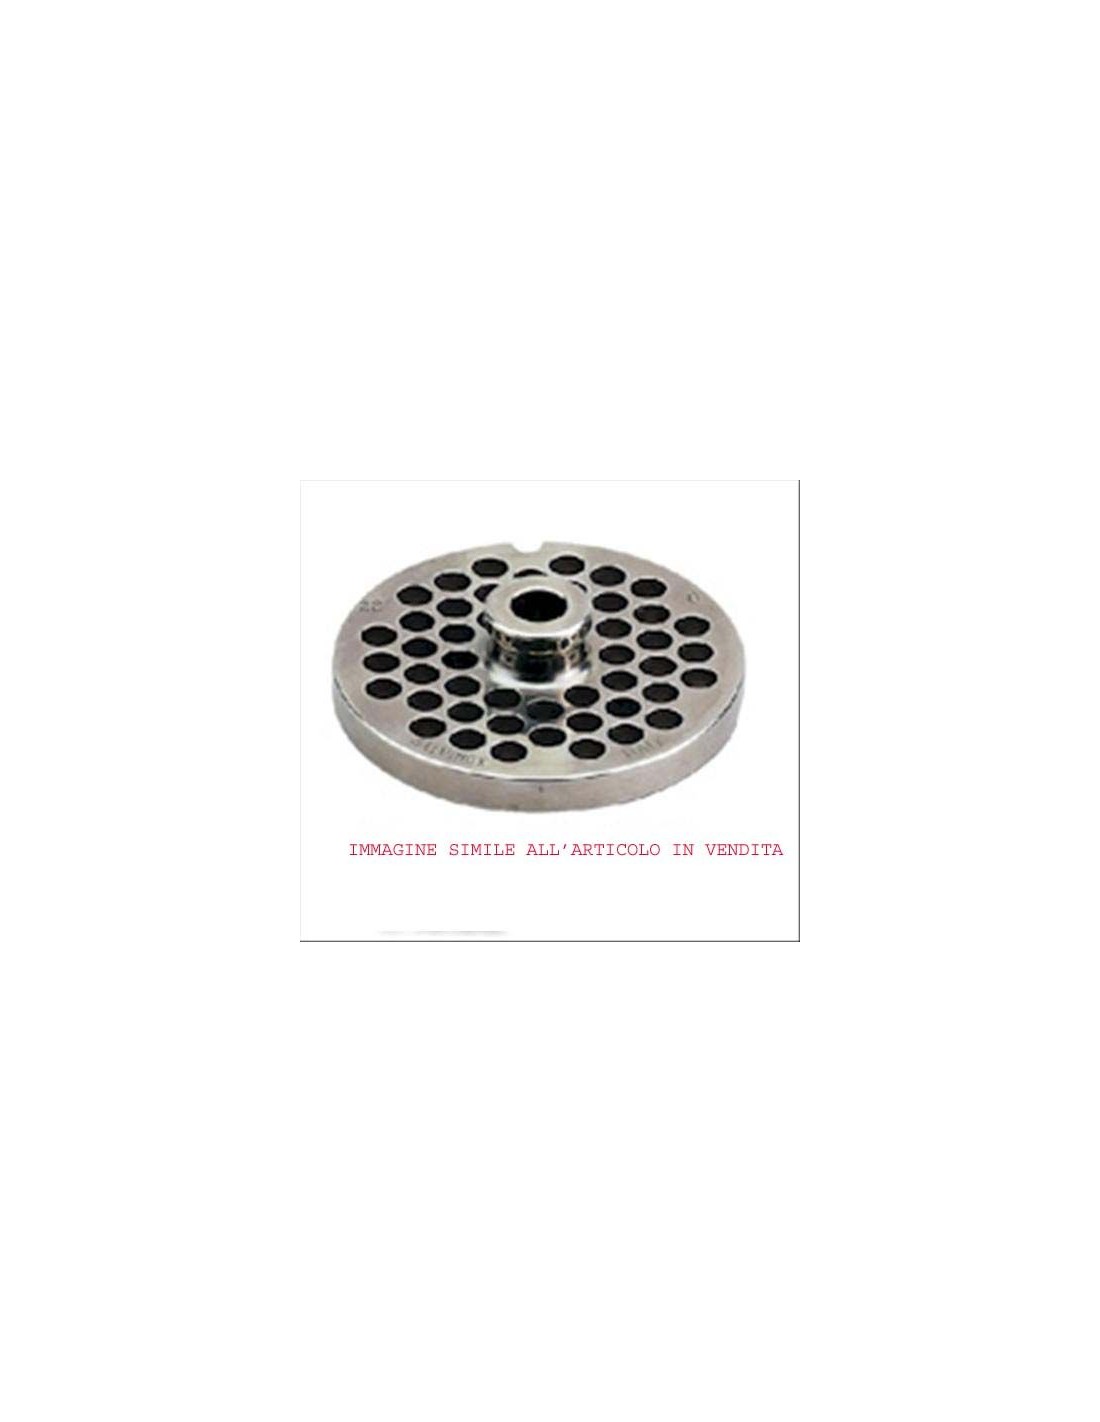 Plates mincer (enterprise) in self-sharpening stainless steel for meat grinder mod 32 - 6 mm diameter holes